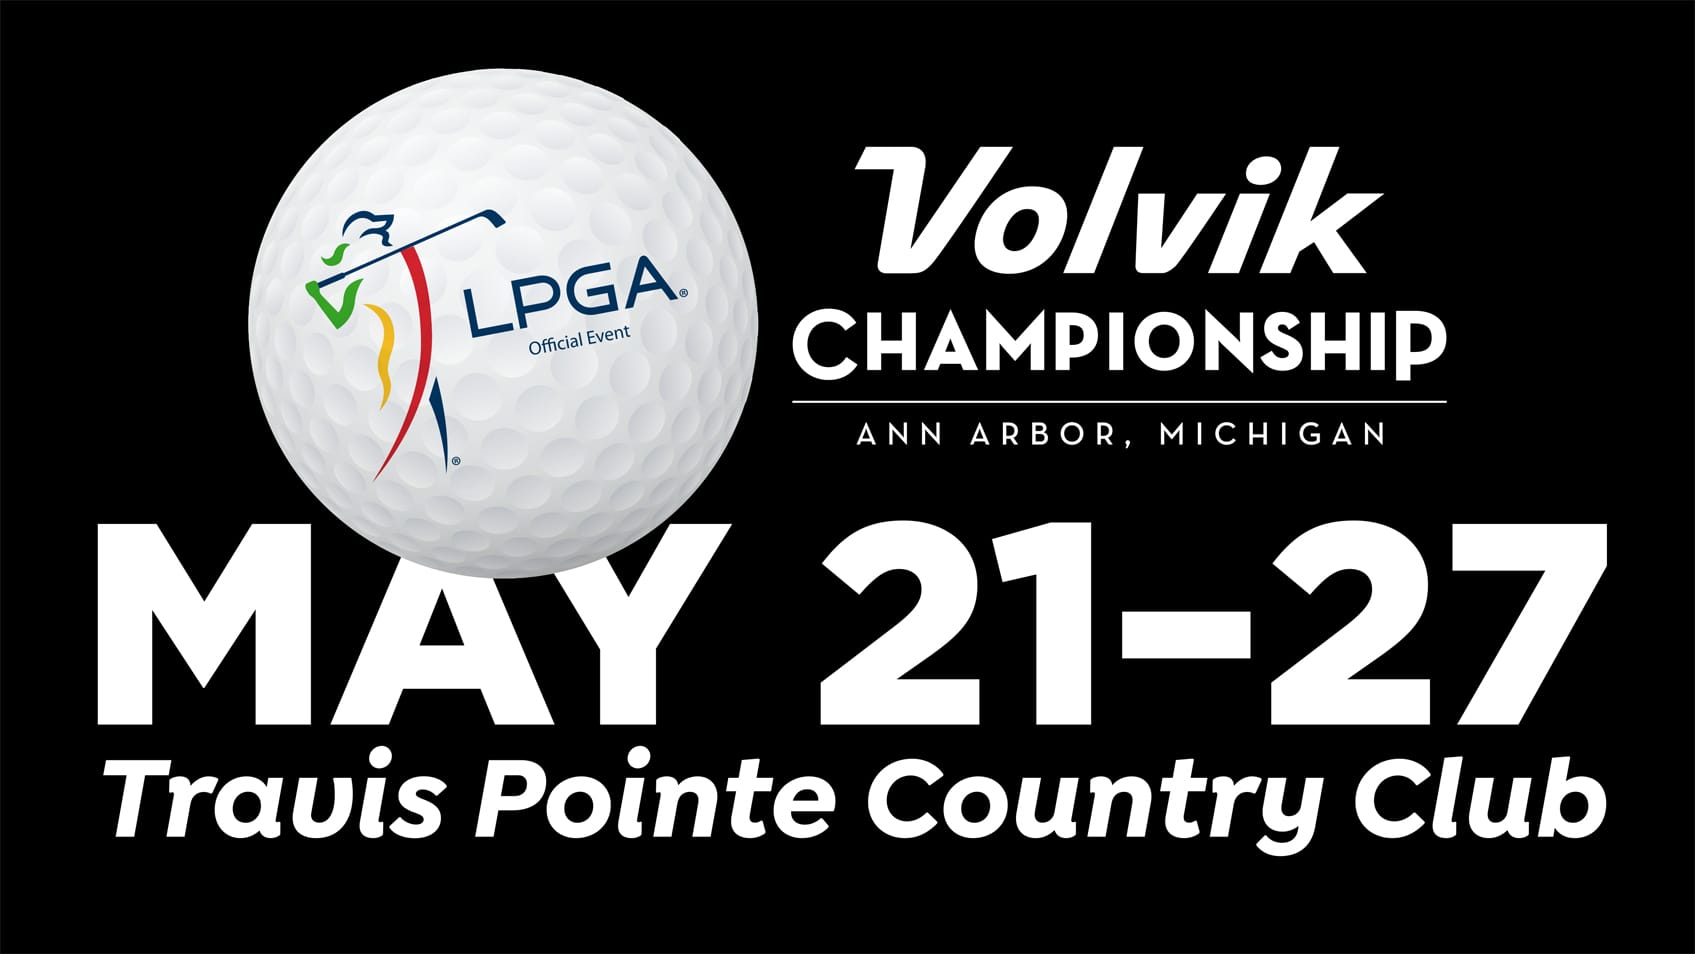 Lewis Jewelers Donating $3,000 in Winnings to LPGA Volvik Championship This May